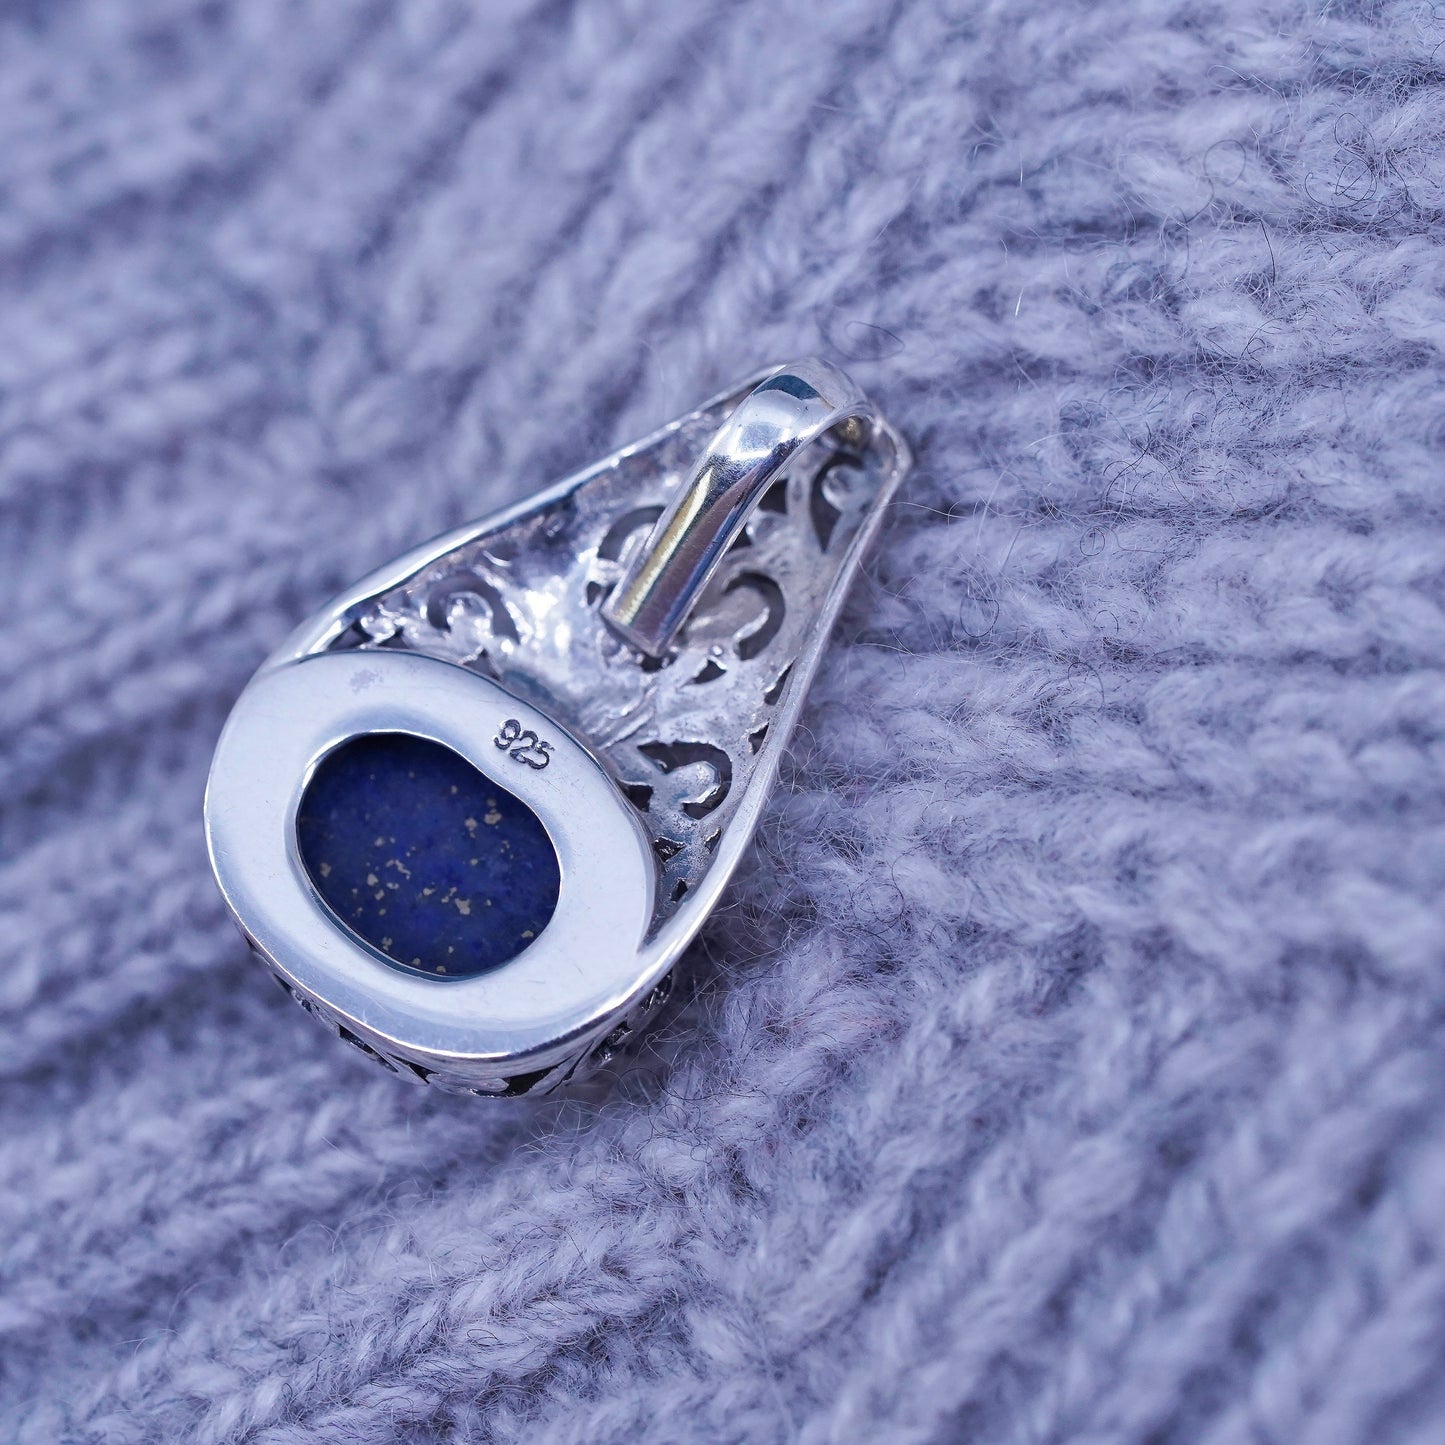 Vintage Sterling silver handmade pendant, 925 filigree teardrop w/ lapis lazuli